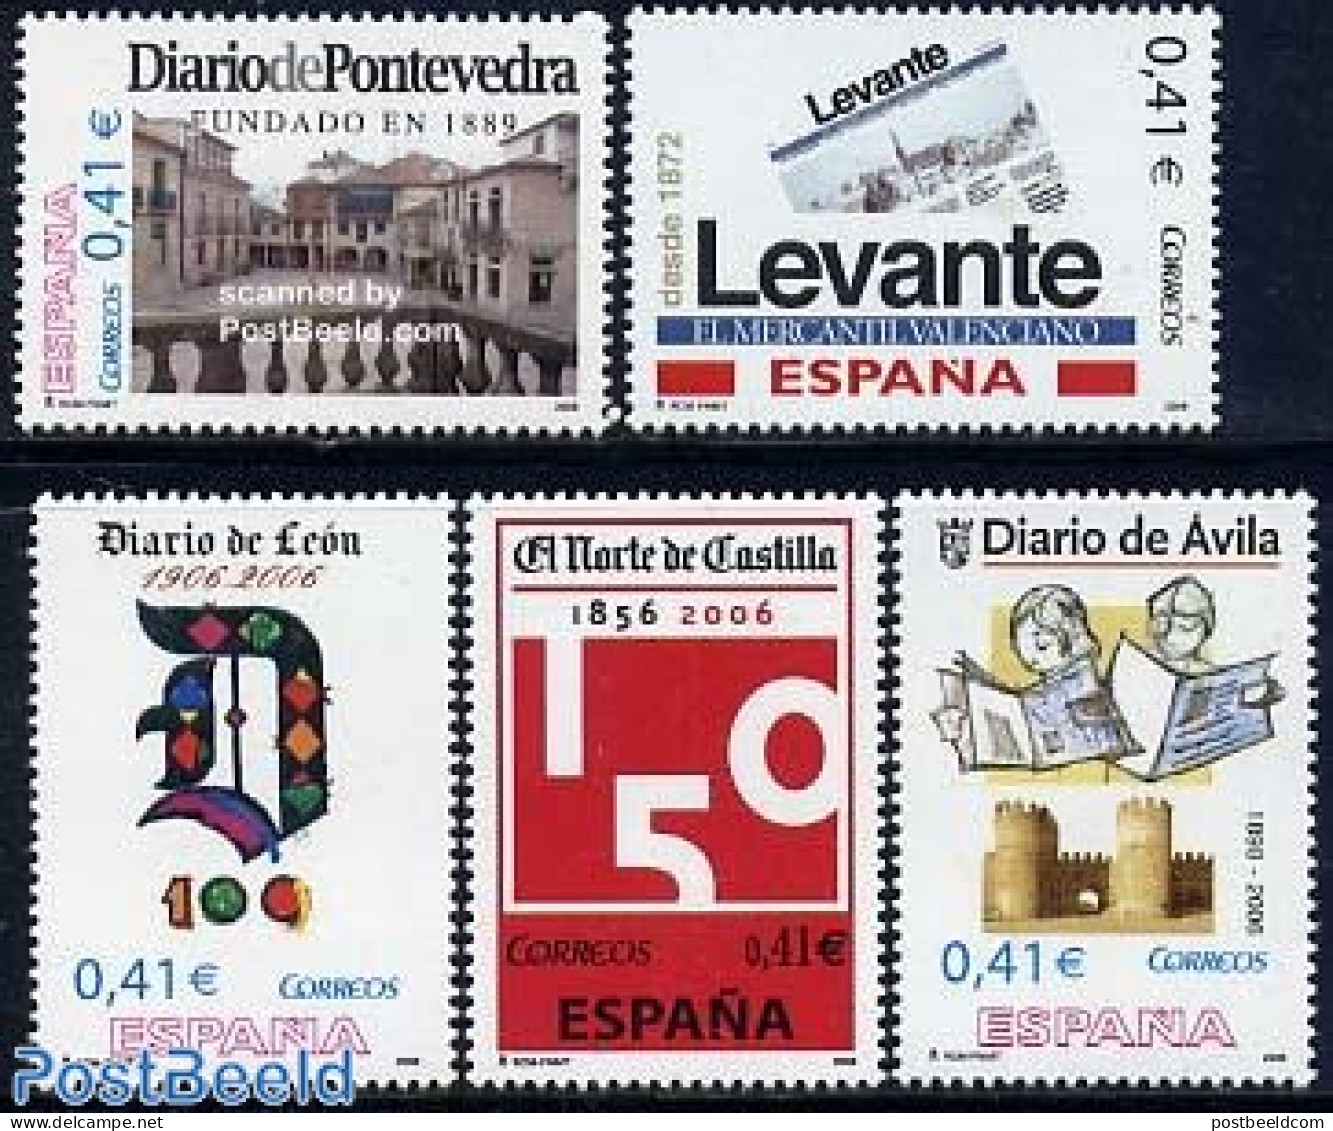 Spain 2006 Newspapers 5v, Mint NH, History - Newspapers & Journalism - Unused Stamps